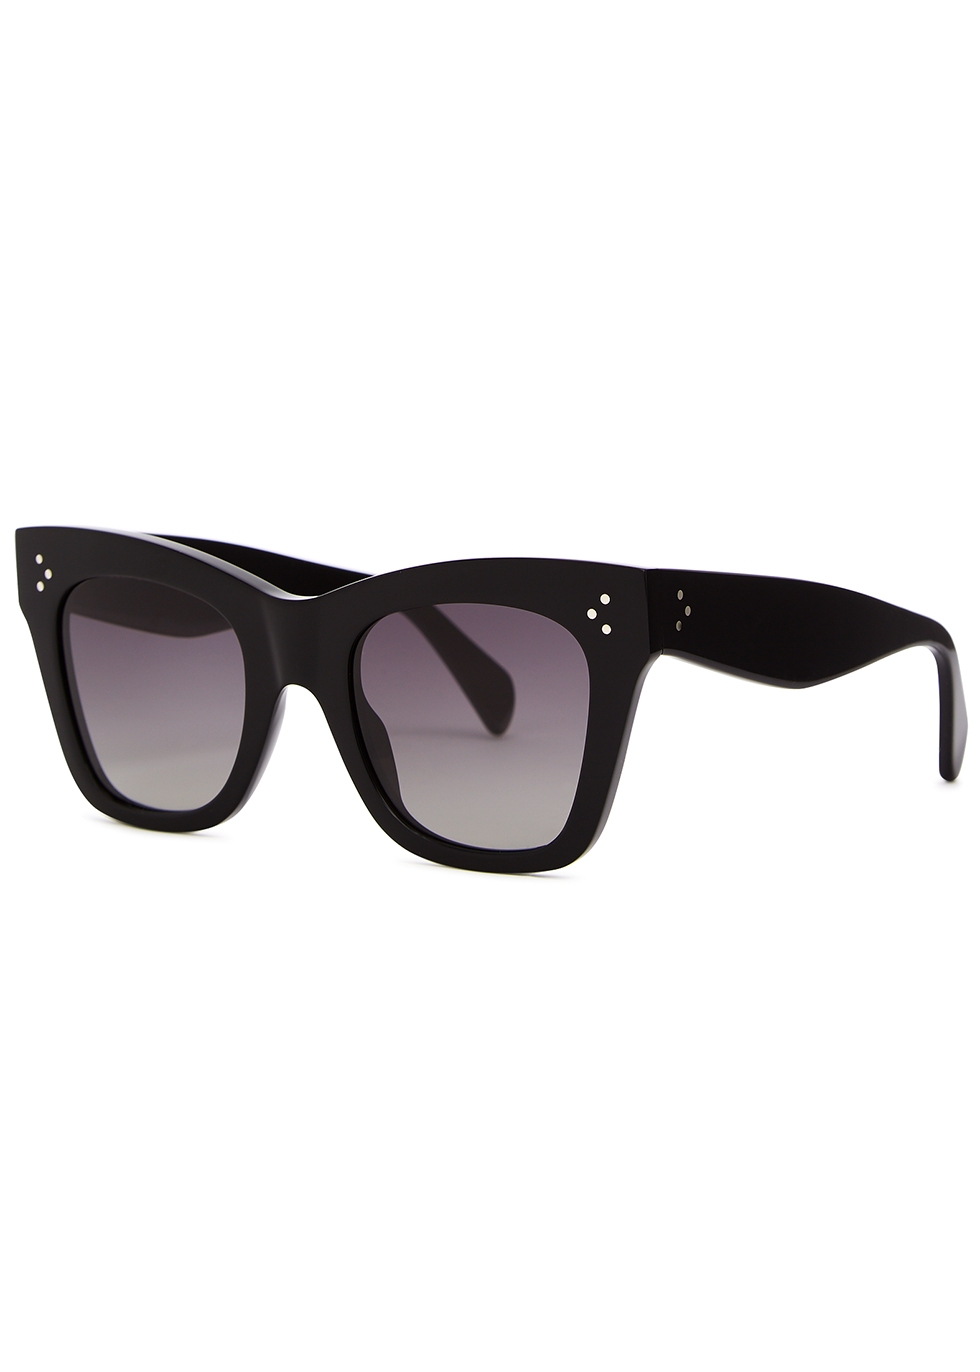 cat-eye-sunglasses-51mm-lupon-gov-ph